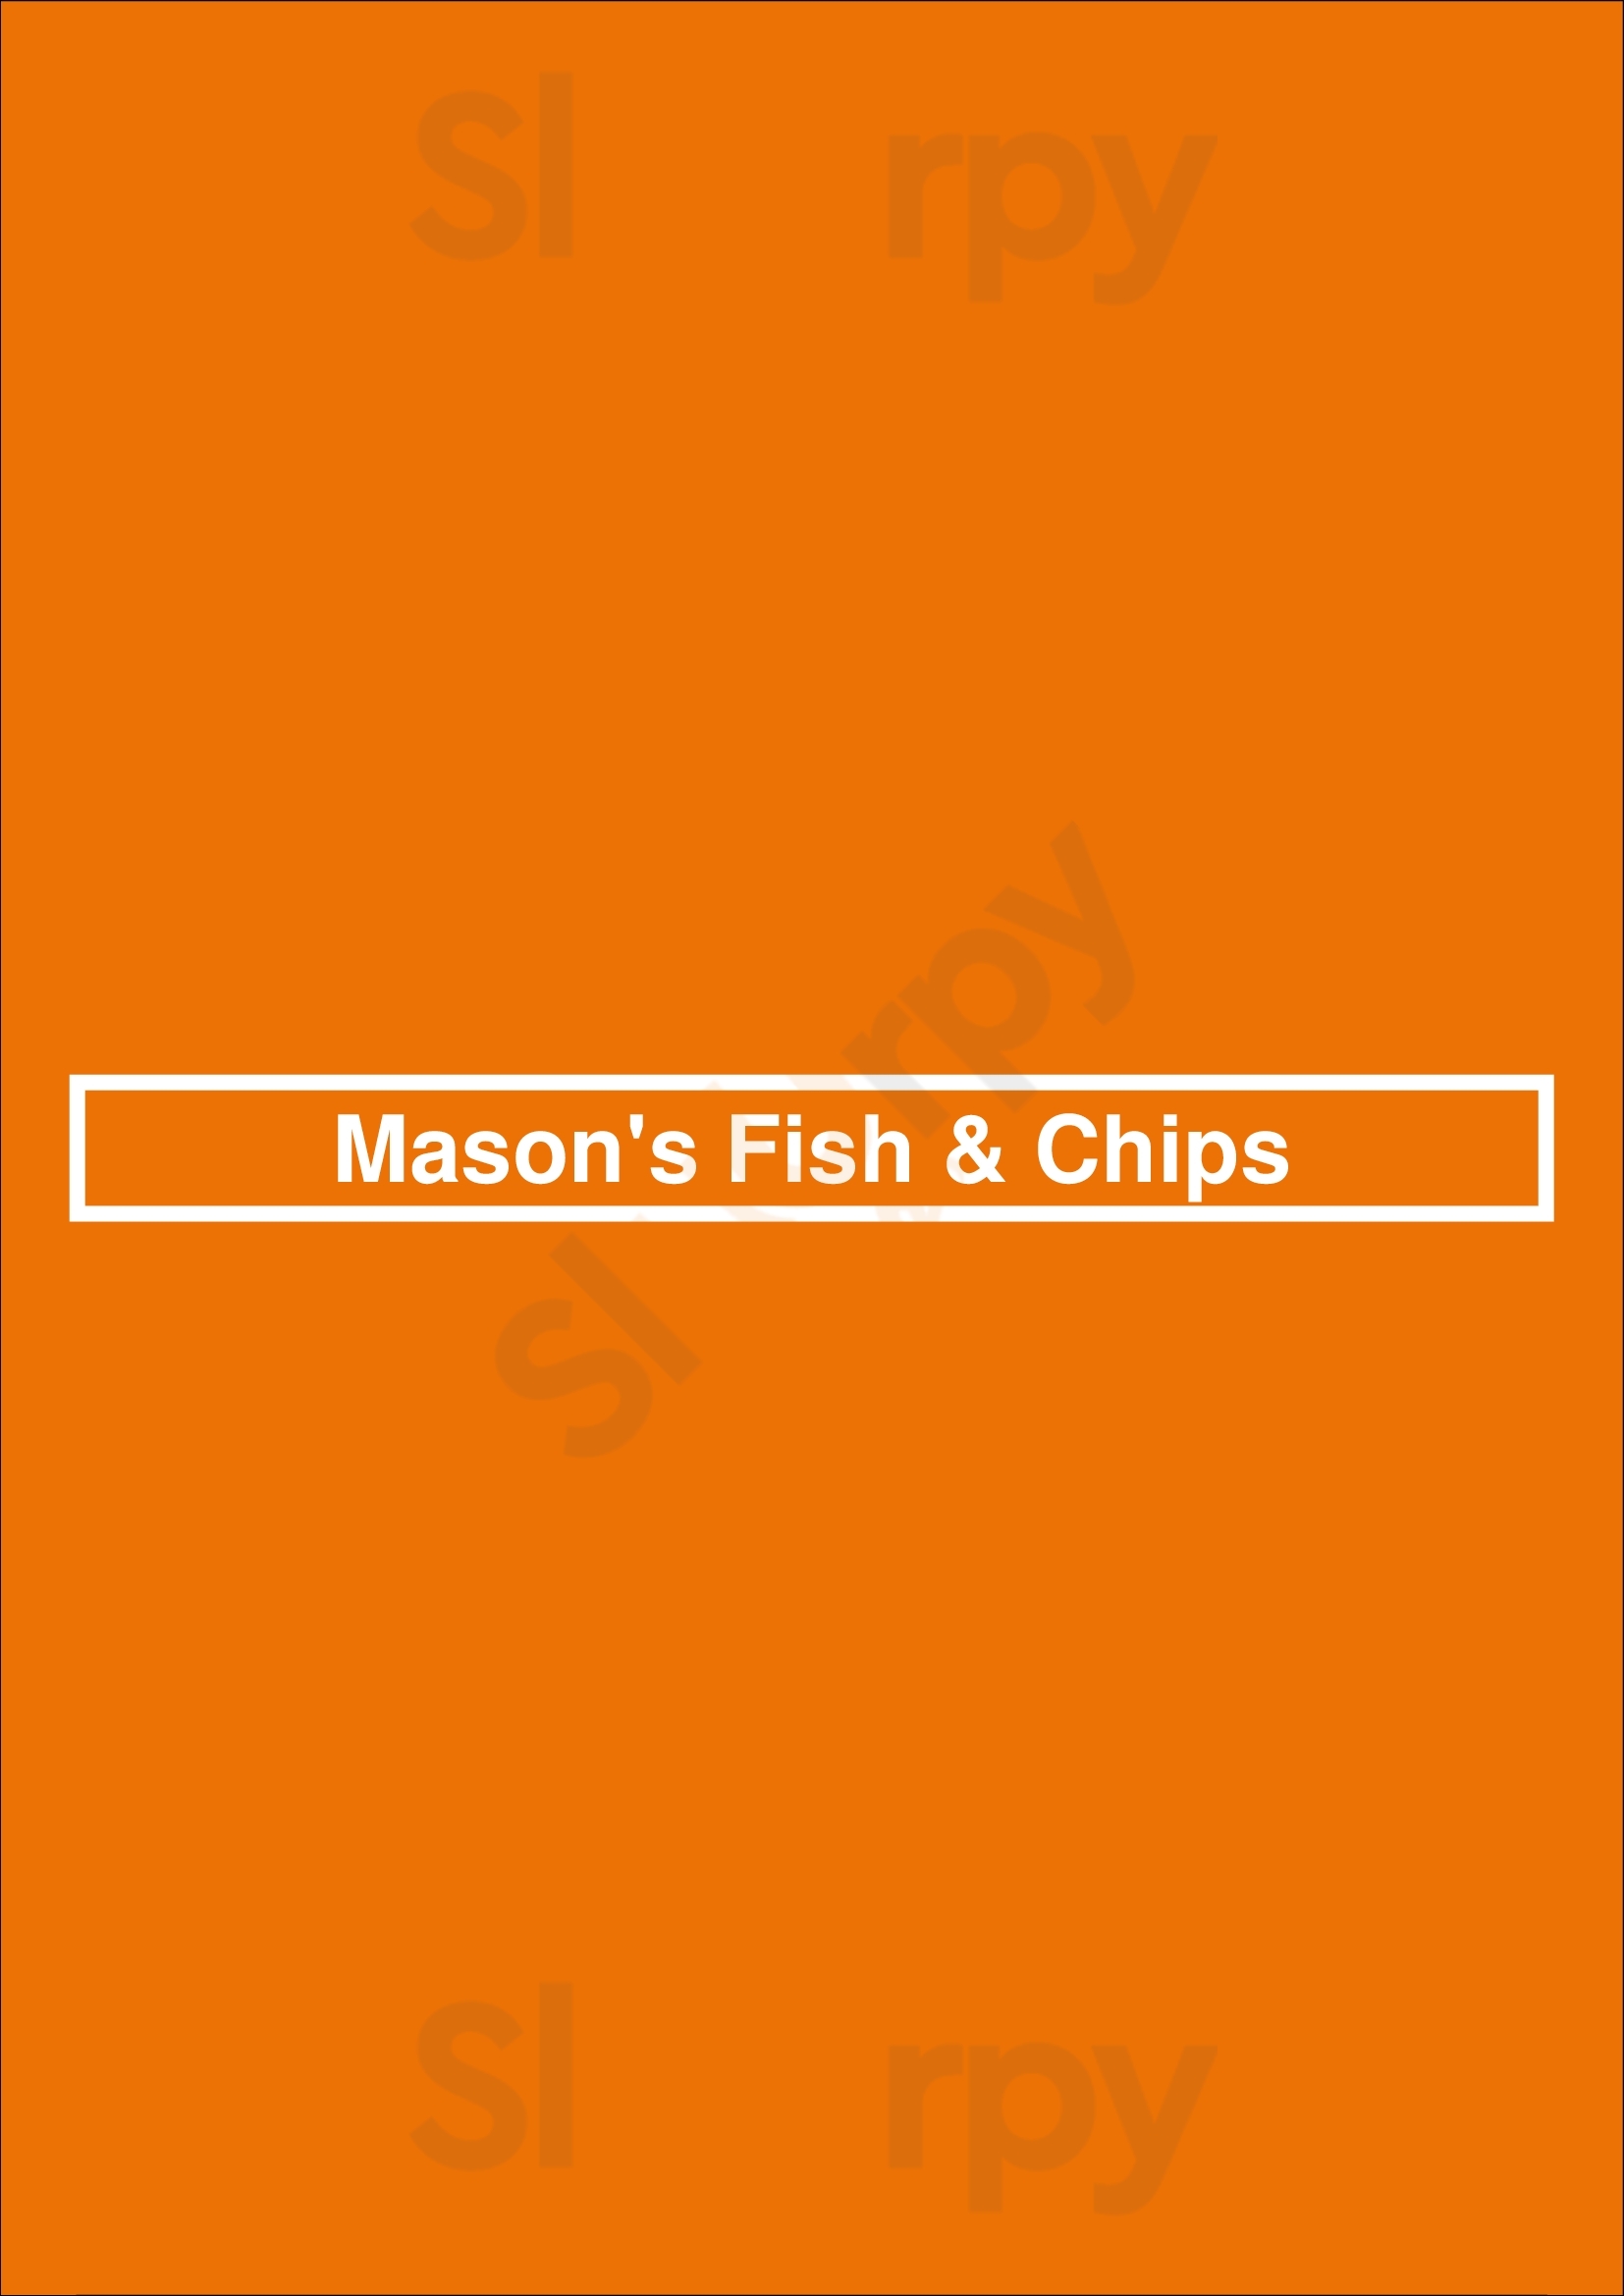 Mason's Fish & Chips Birmingham Menu - 1